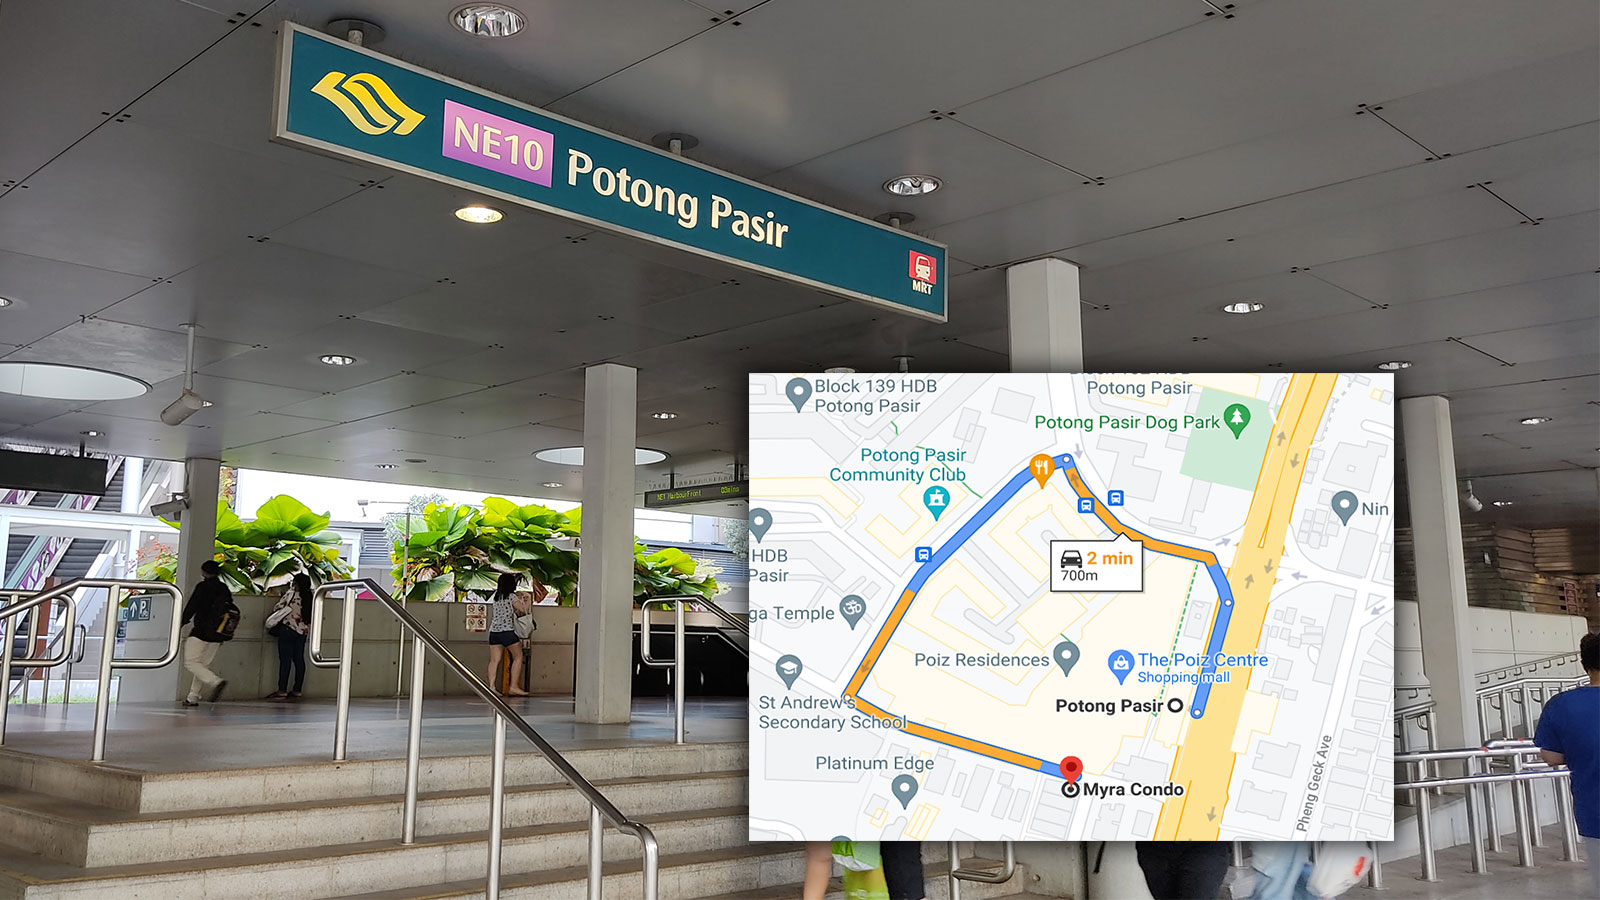 Potong Pasir Station